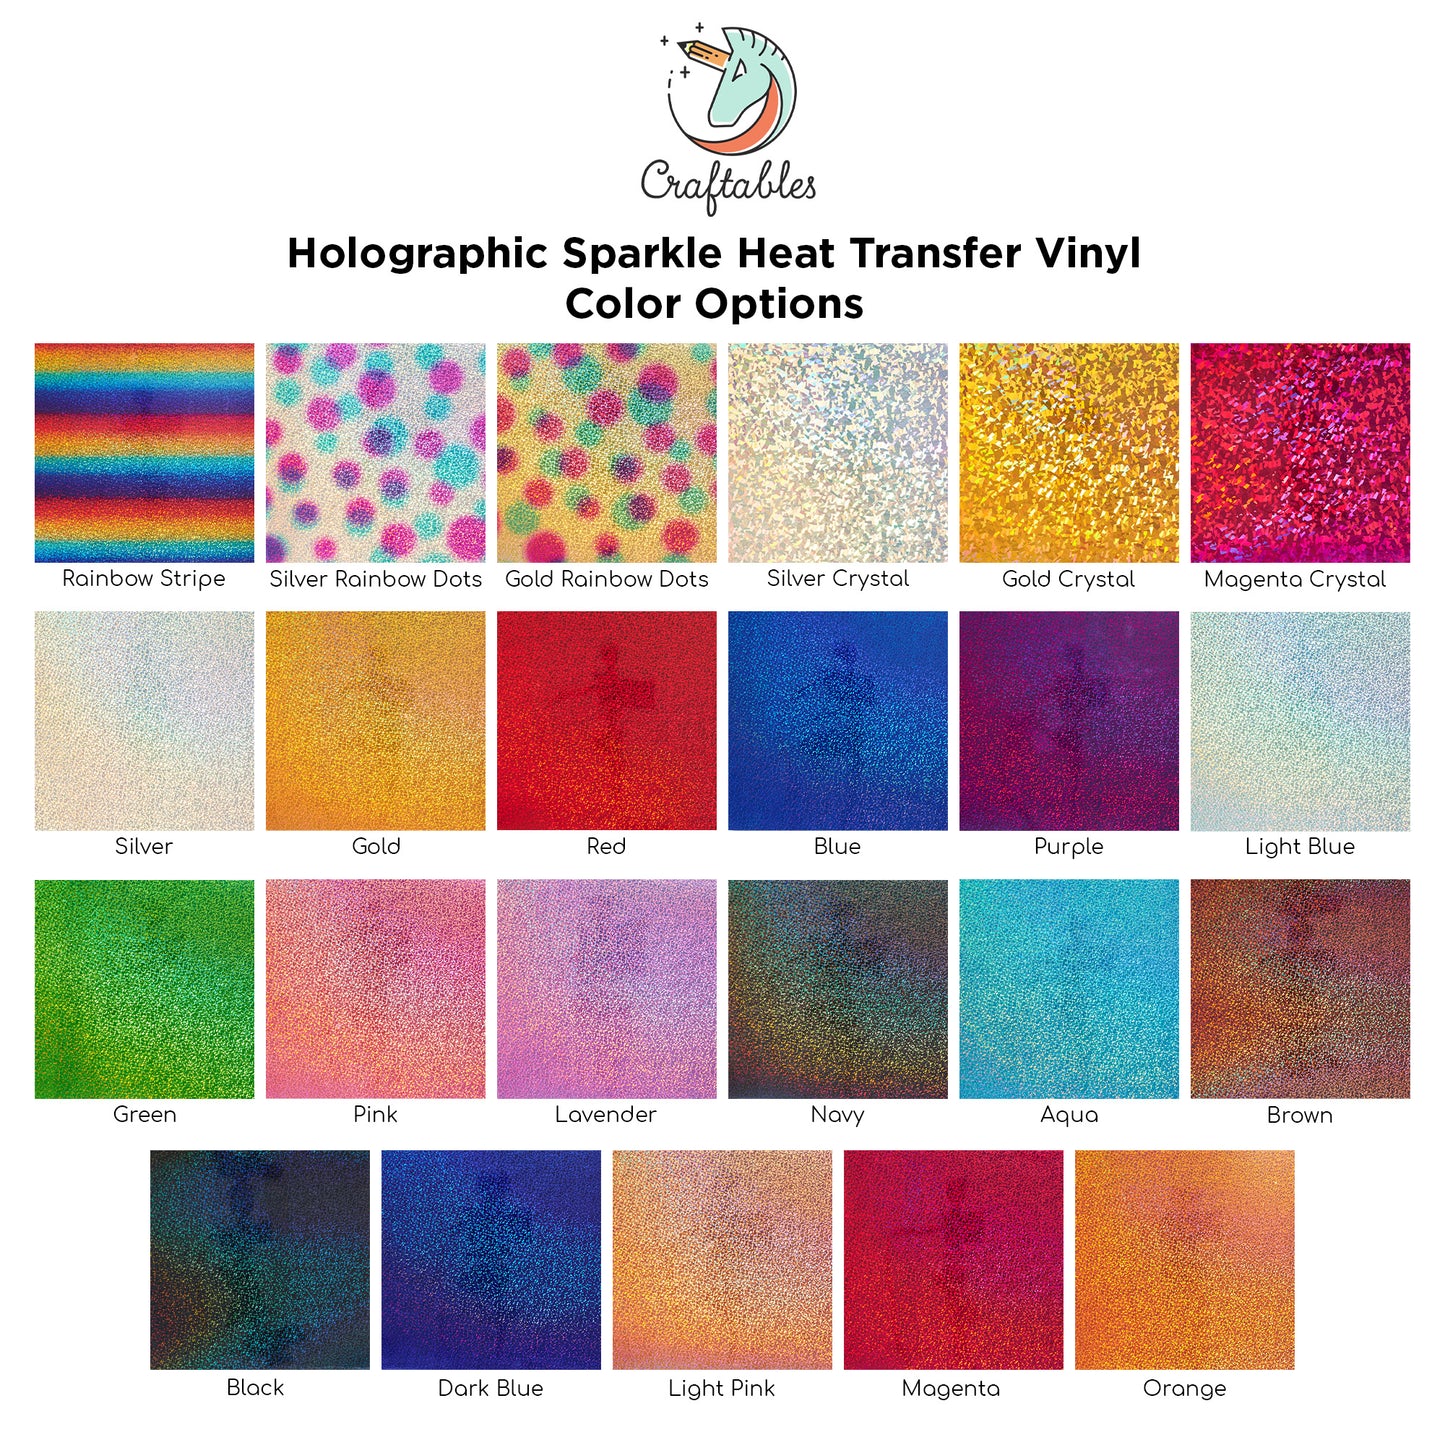 Dark Blue Holographic Sparkle Heat Transfer Vinyl Rolls By Craftables